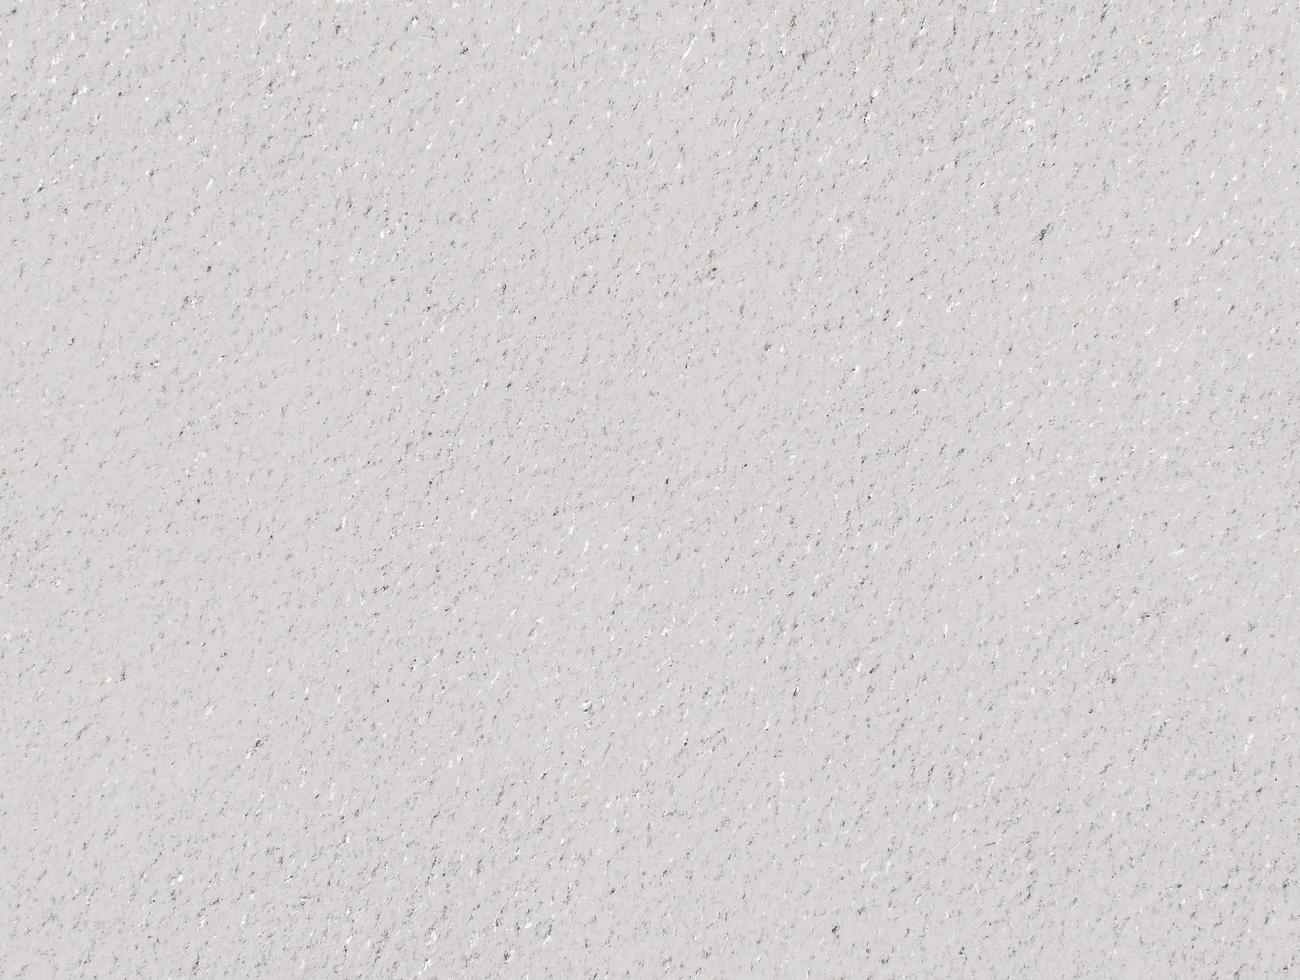 Minimalist concrete wall texture photo